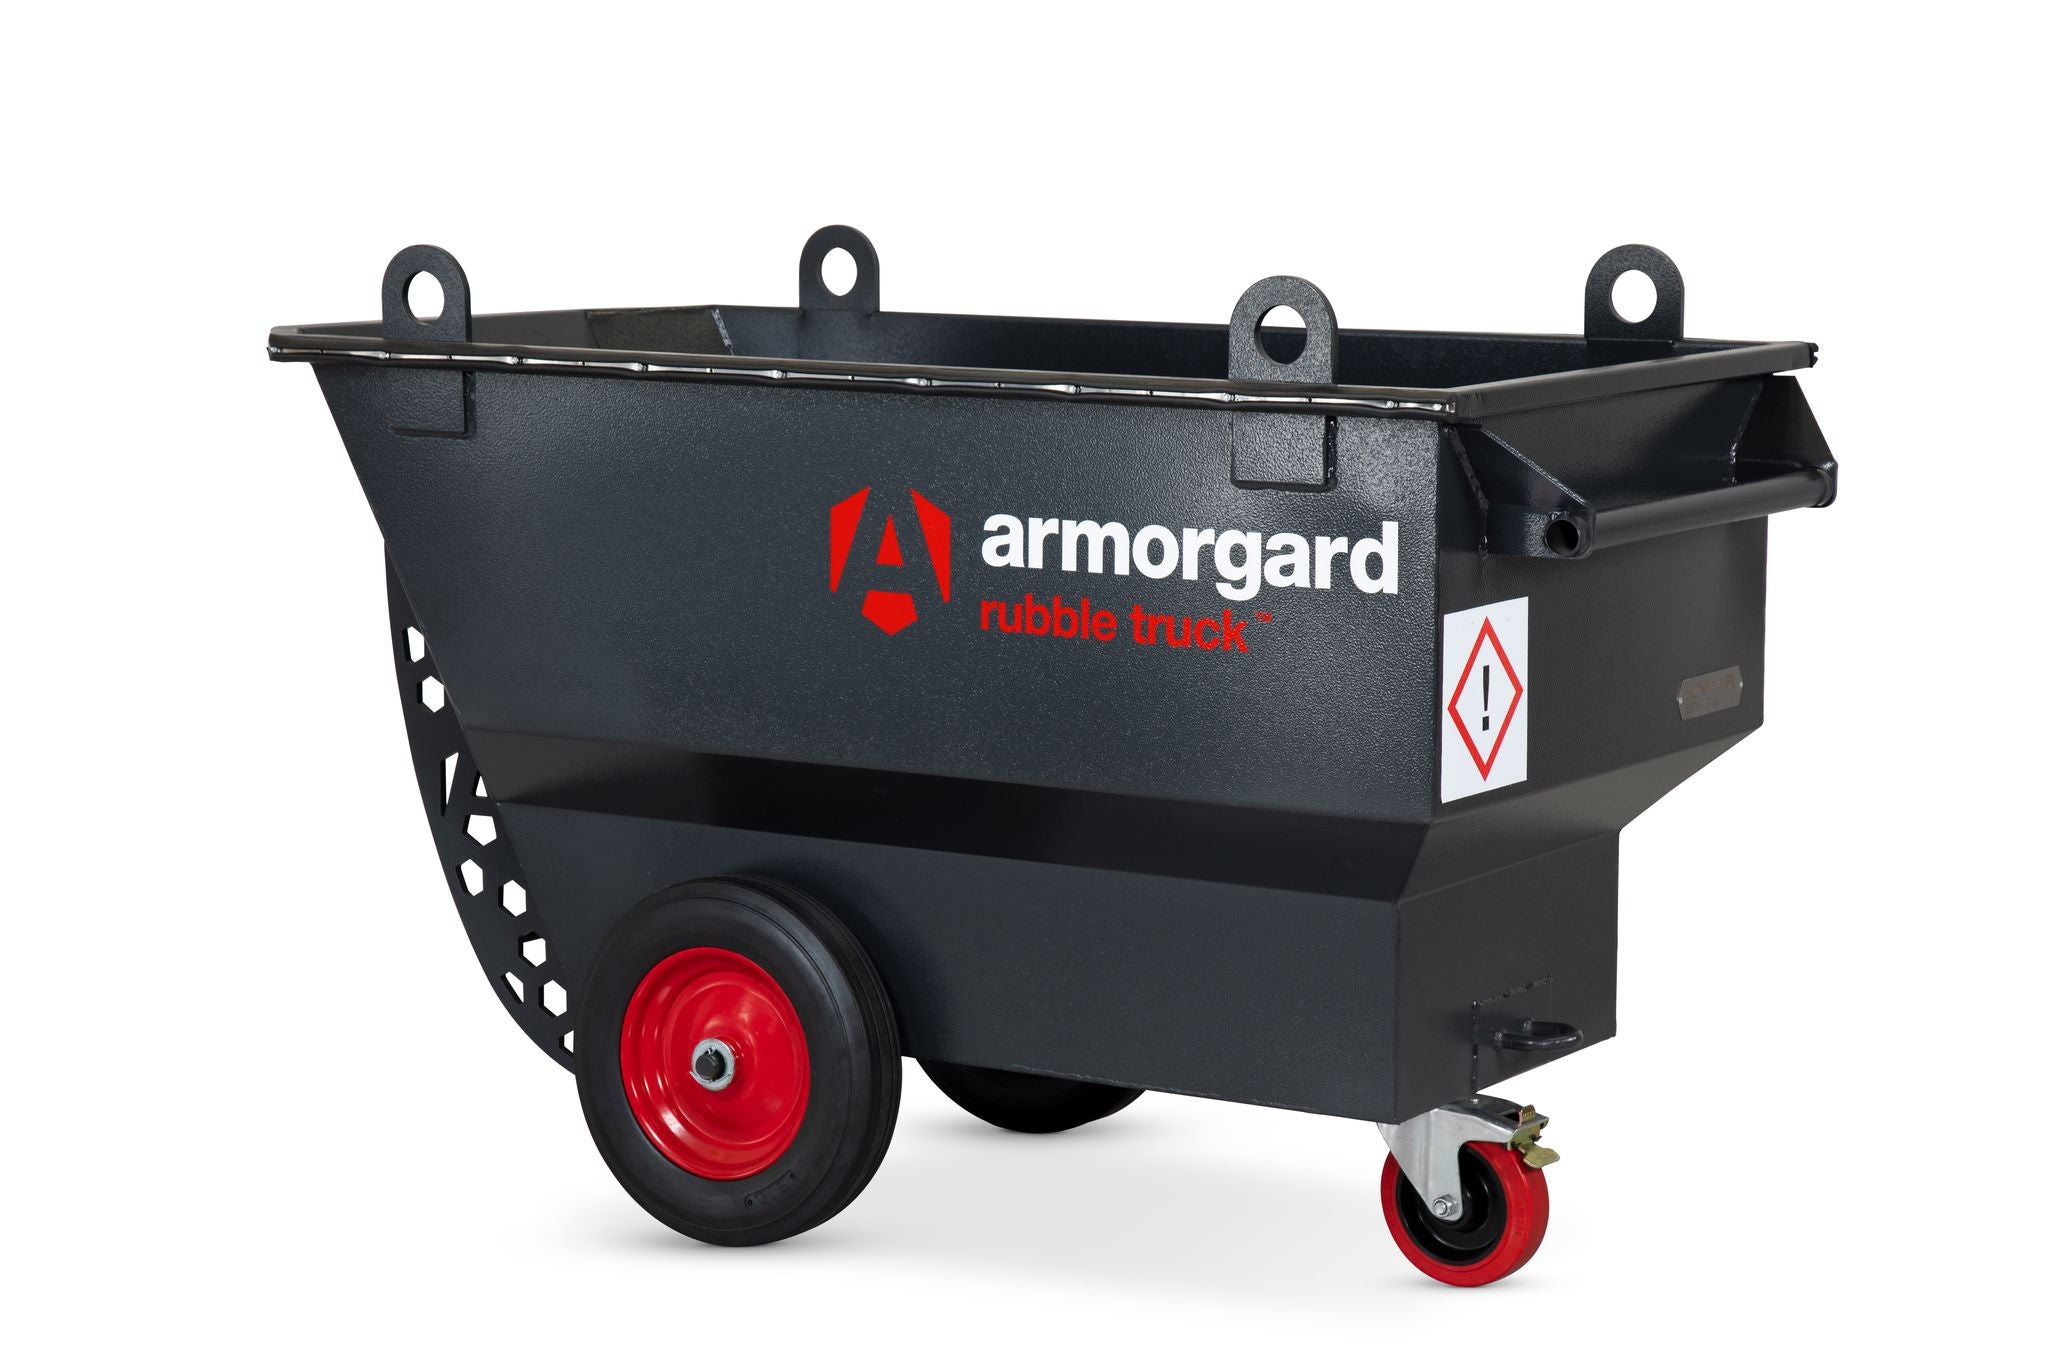 Armorgard Rubble Truck RT